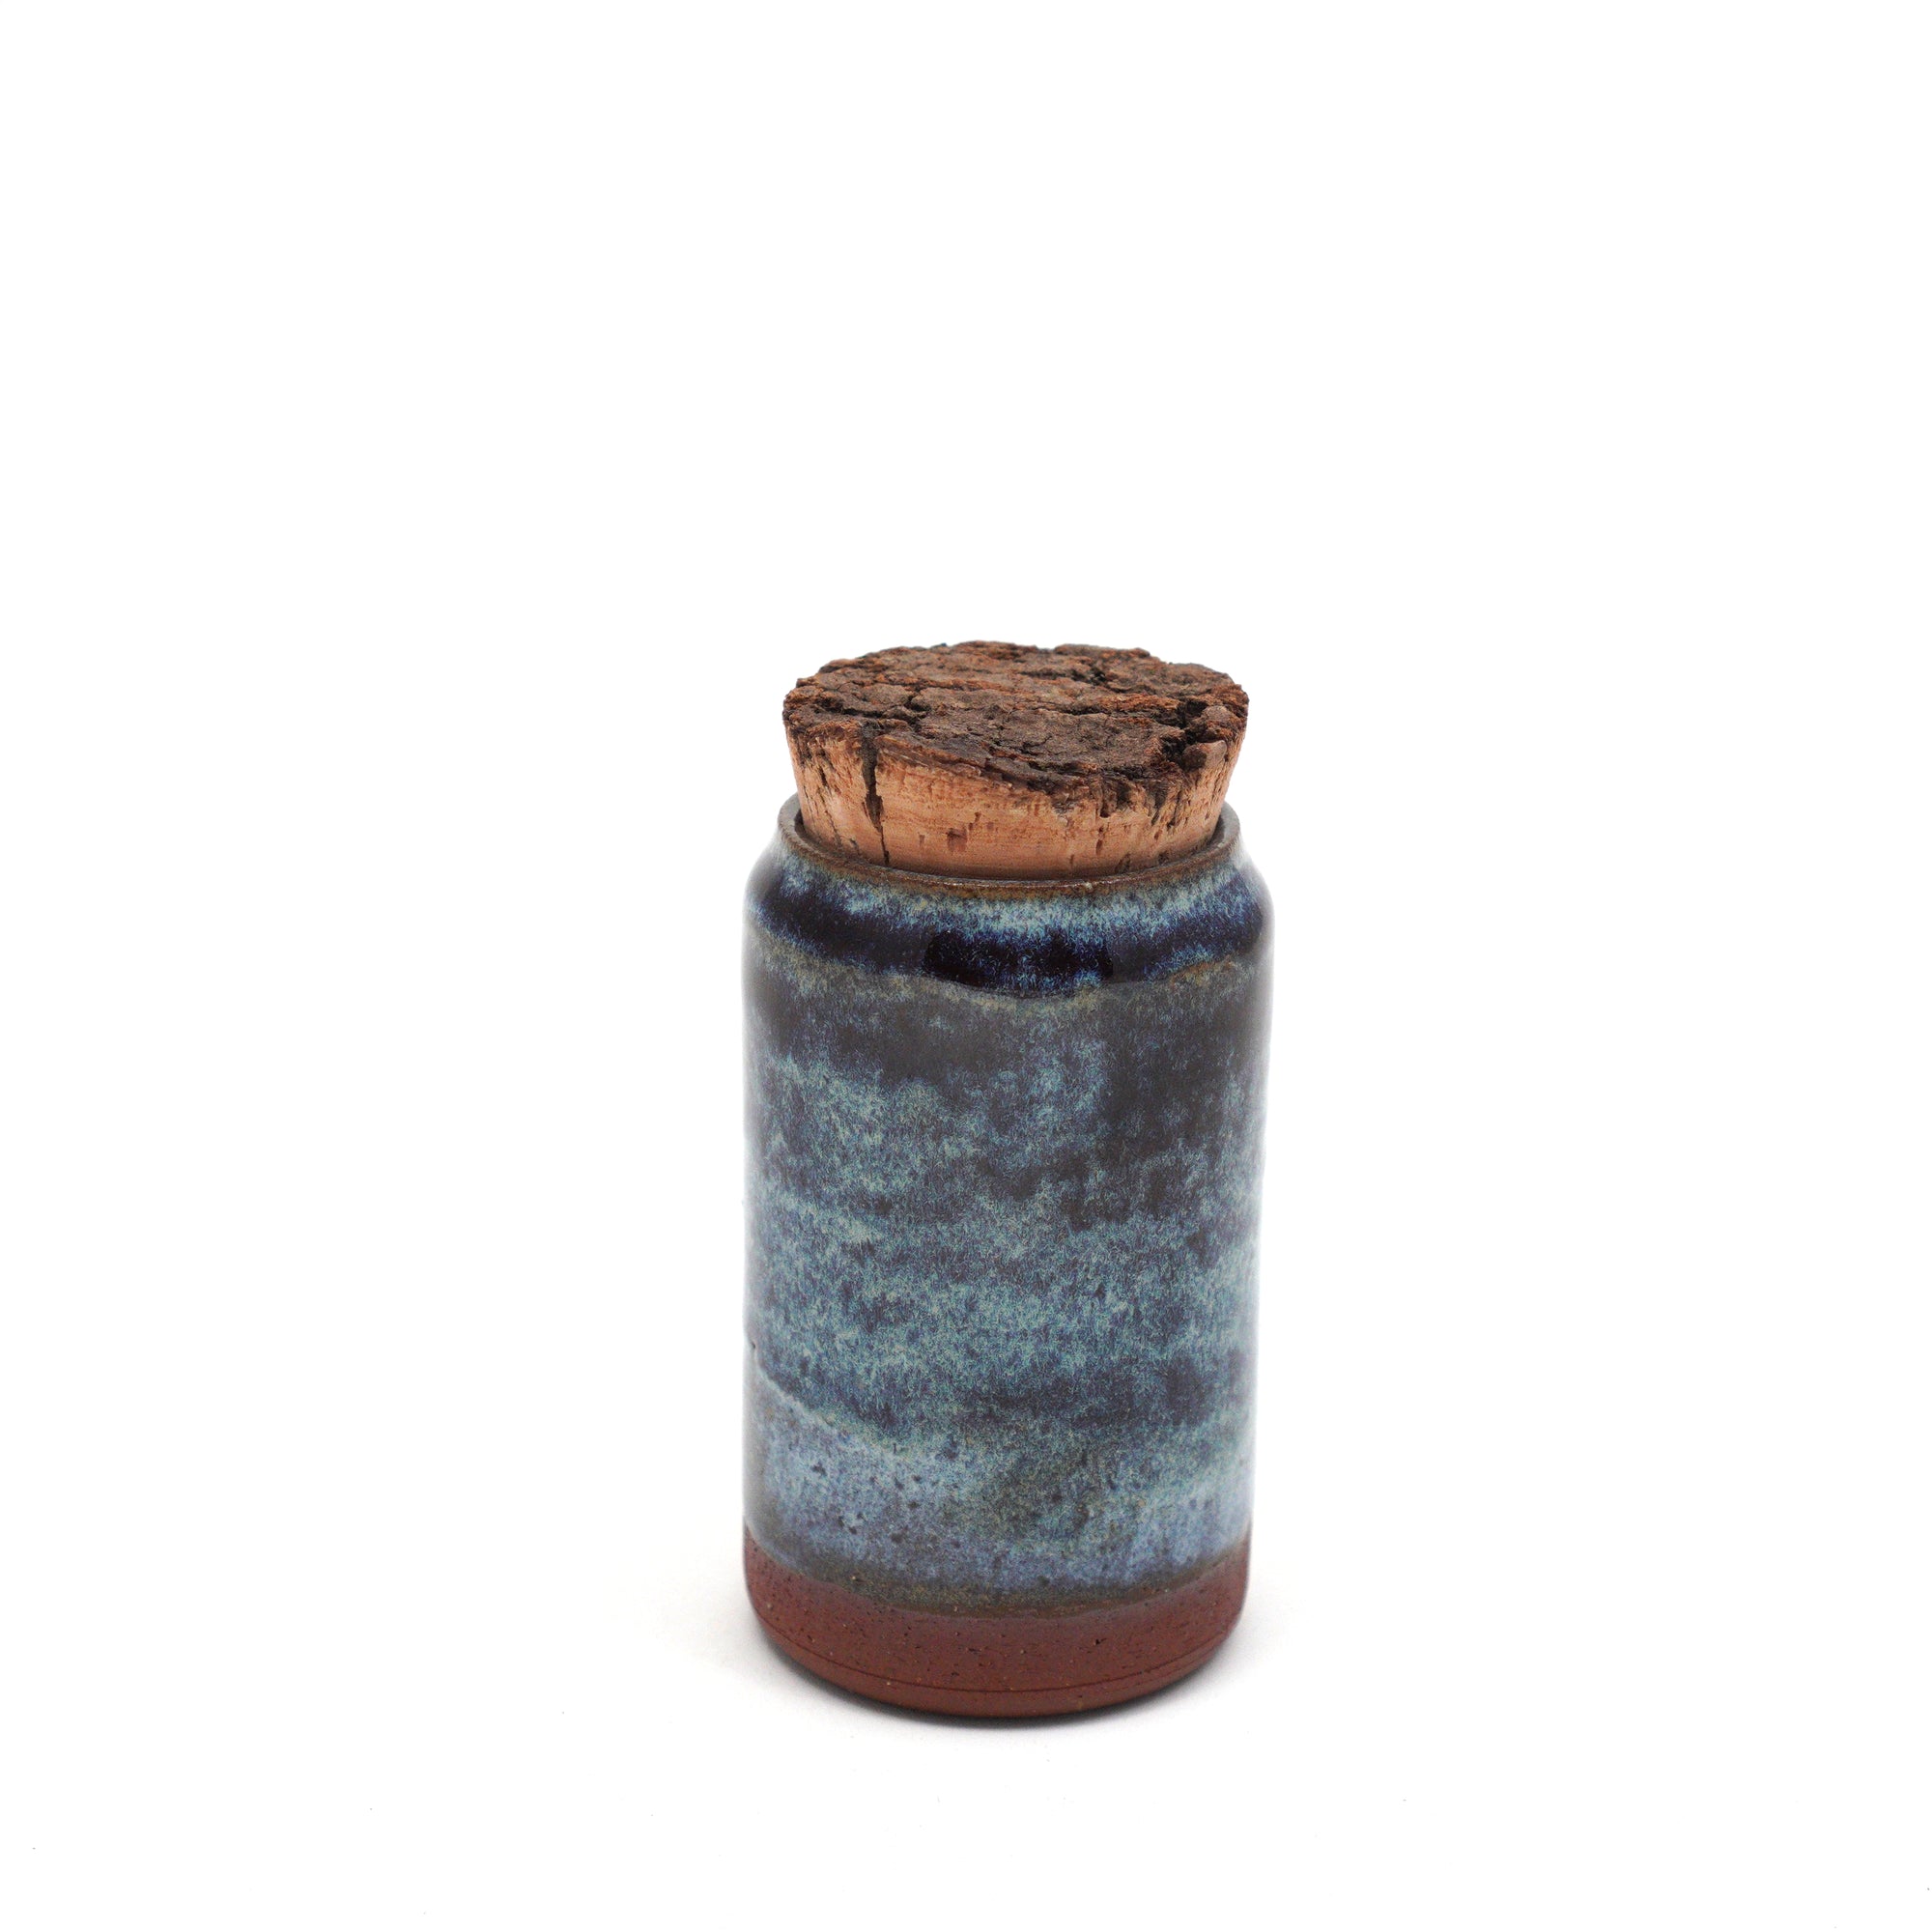 Handmade Ceramic 6oz Corked Jar with light blue & dark purple glaze